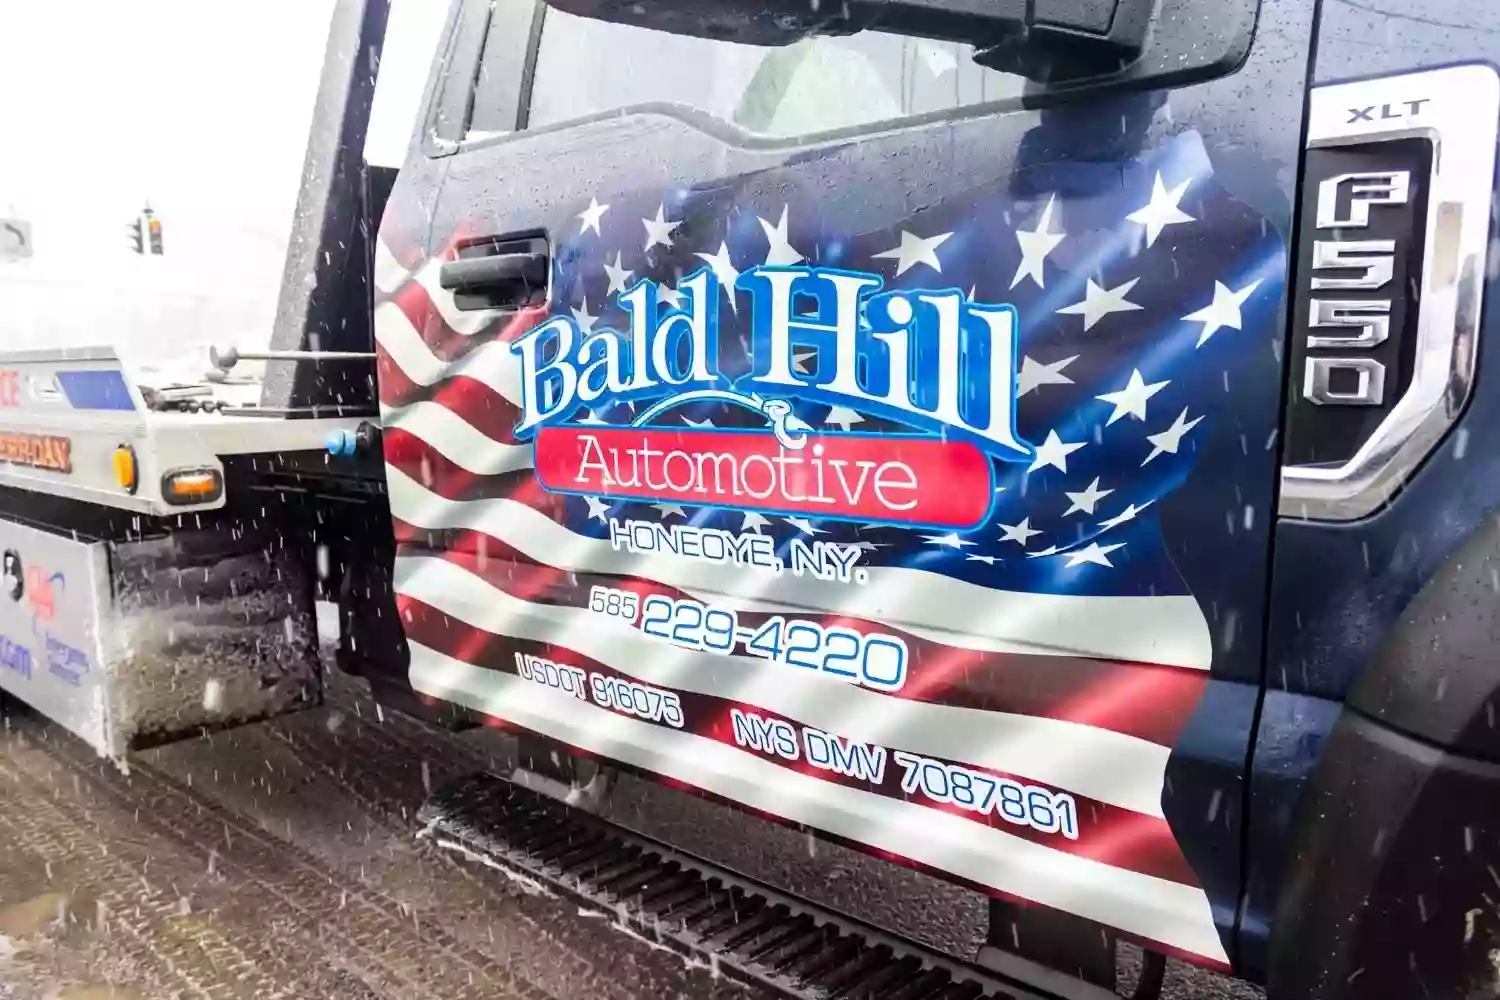 Bald Hill Automotive